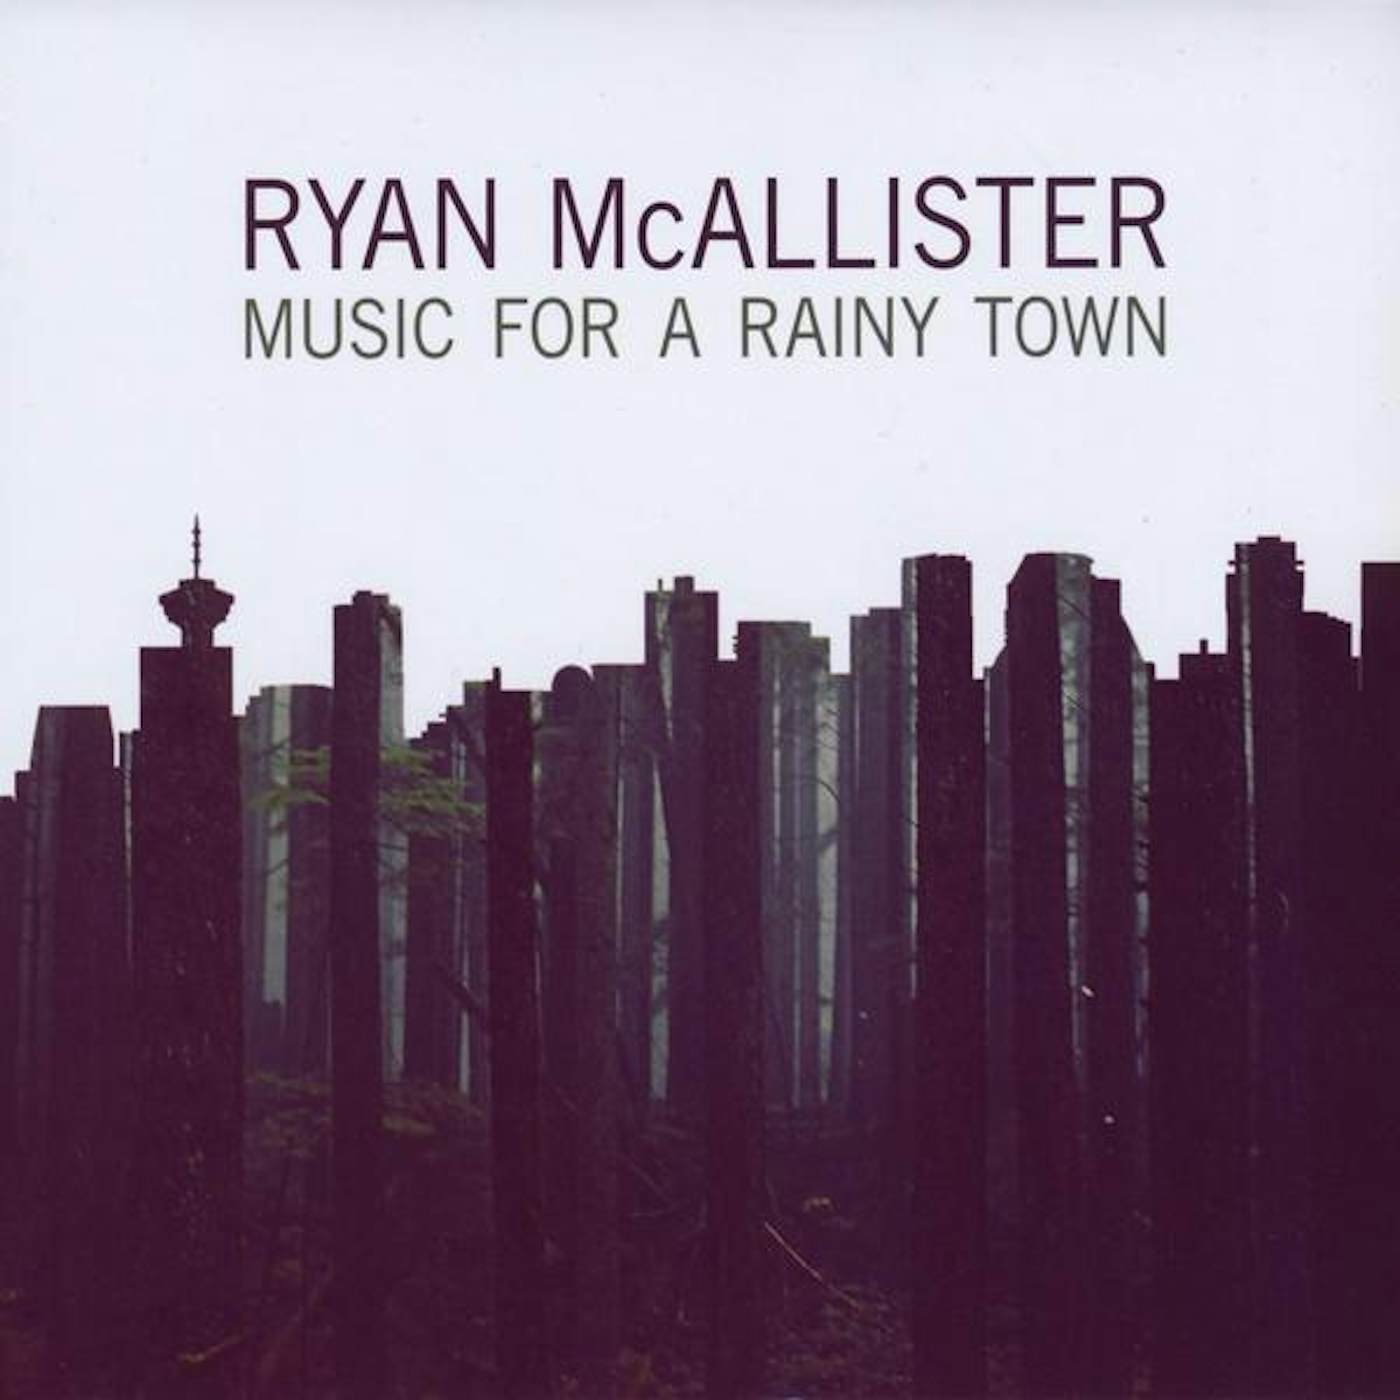 Ryan McAllister MUSIC FOR A RAINY TOWN CD